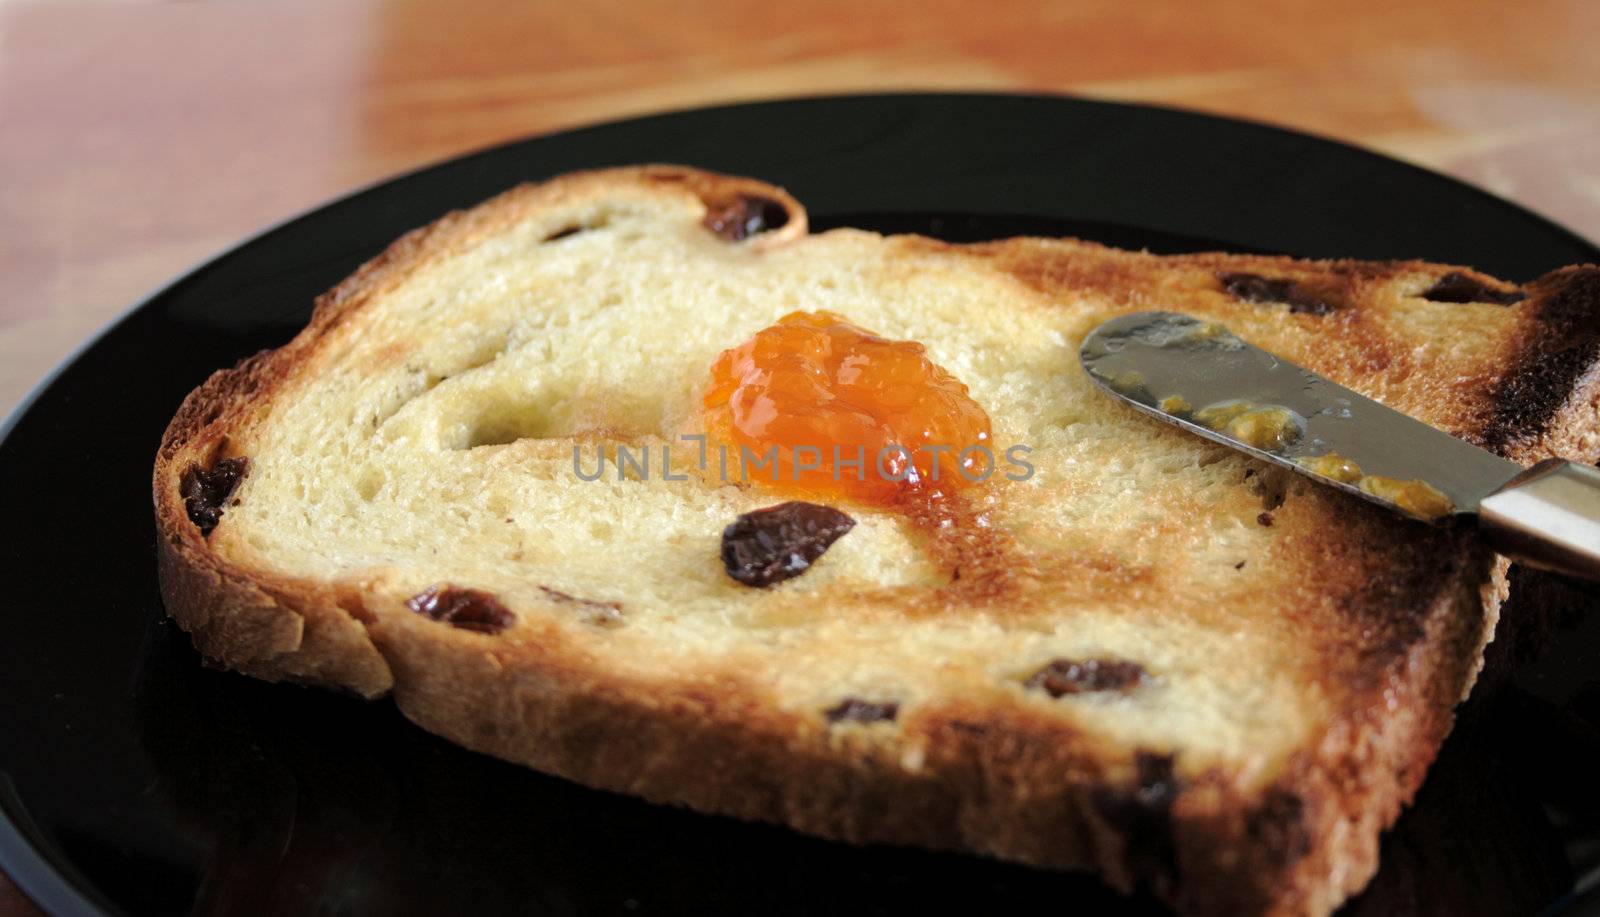 raisin toast with apricot jam by nebari